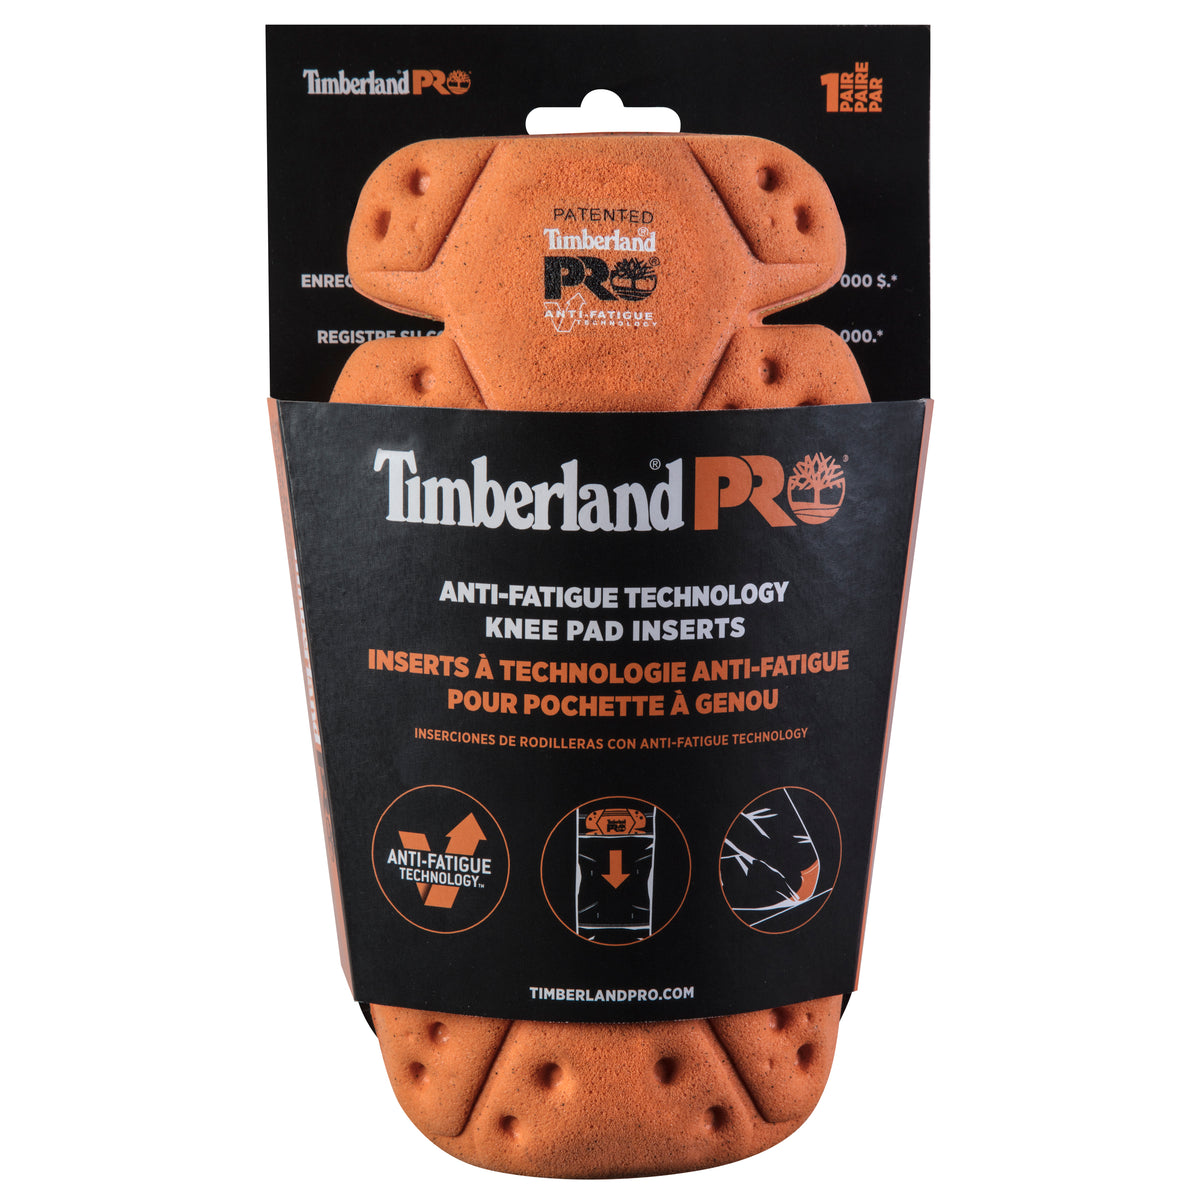 Timberland PRO Anti-Fatigue Knee Pad Insert - A3T6I Regular price $39.99